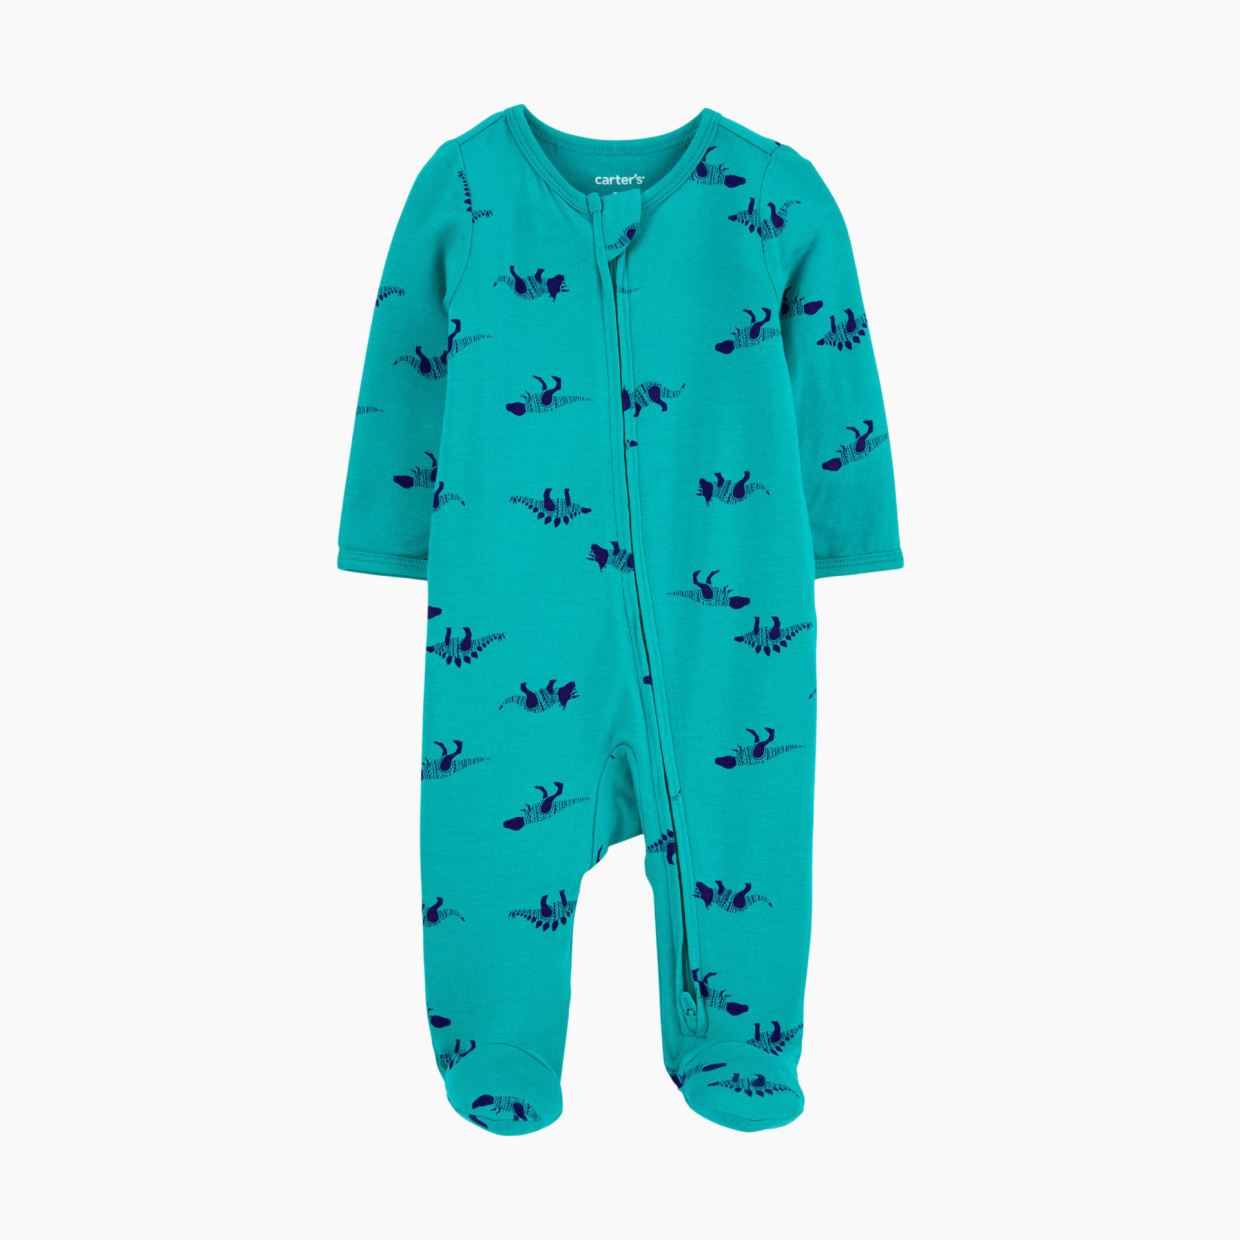 Carter's 2-Way Zip Lenzing Ecovera Sleep & Play Pajamas - Blue Dino, Nb.